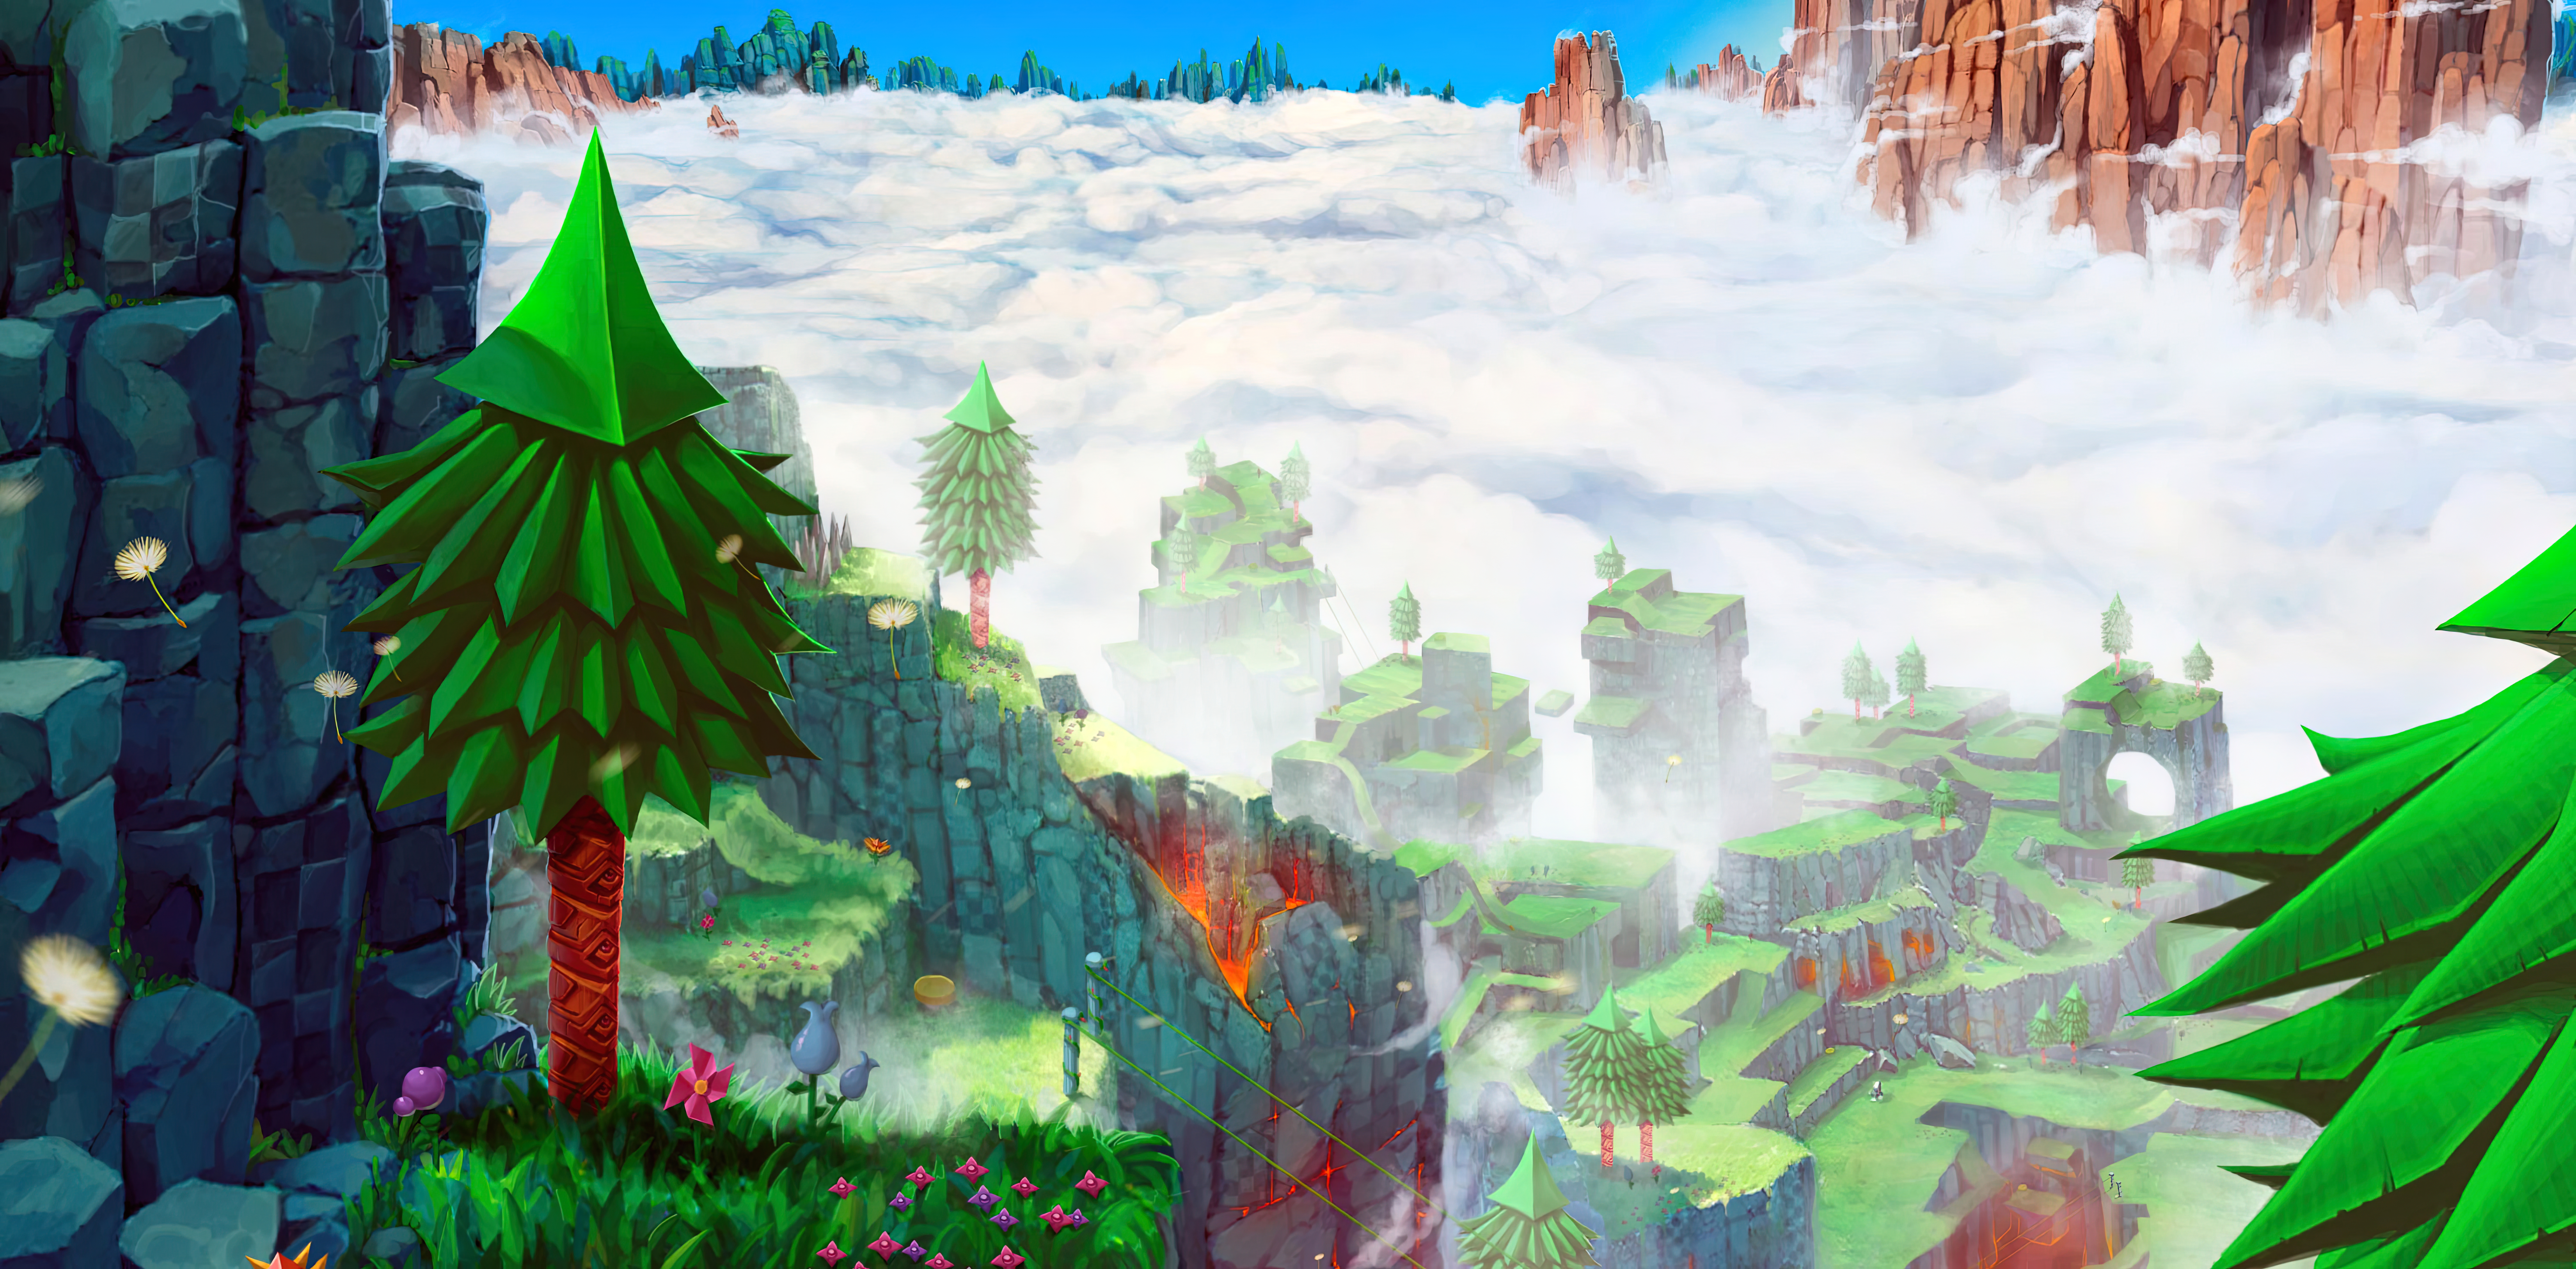 Sonic Sonic The Hedgehog Sonic 2 Seashore Hills Trees Landscape Sega Clouds Video Game Art 6000x2956